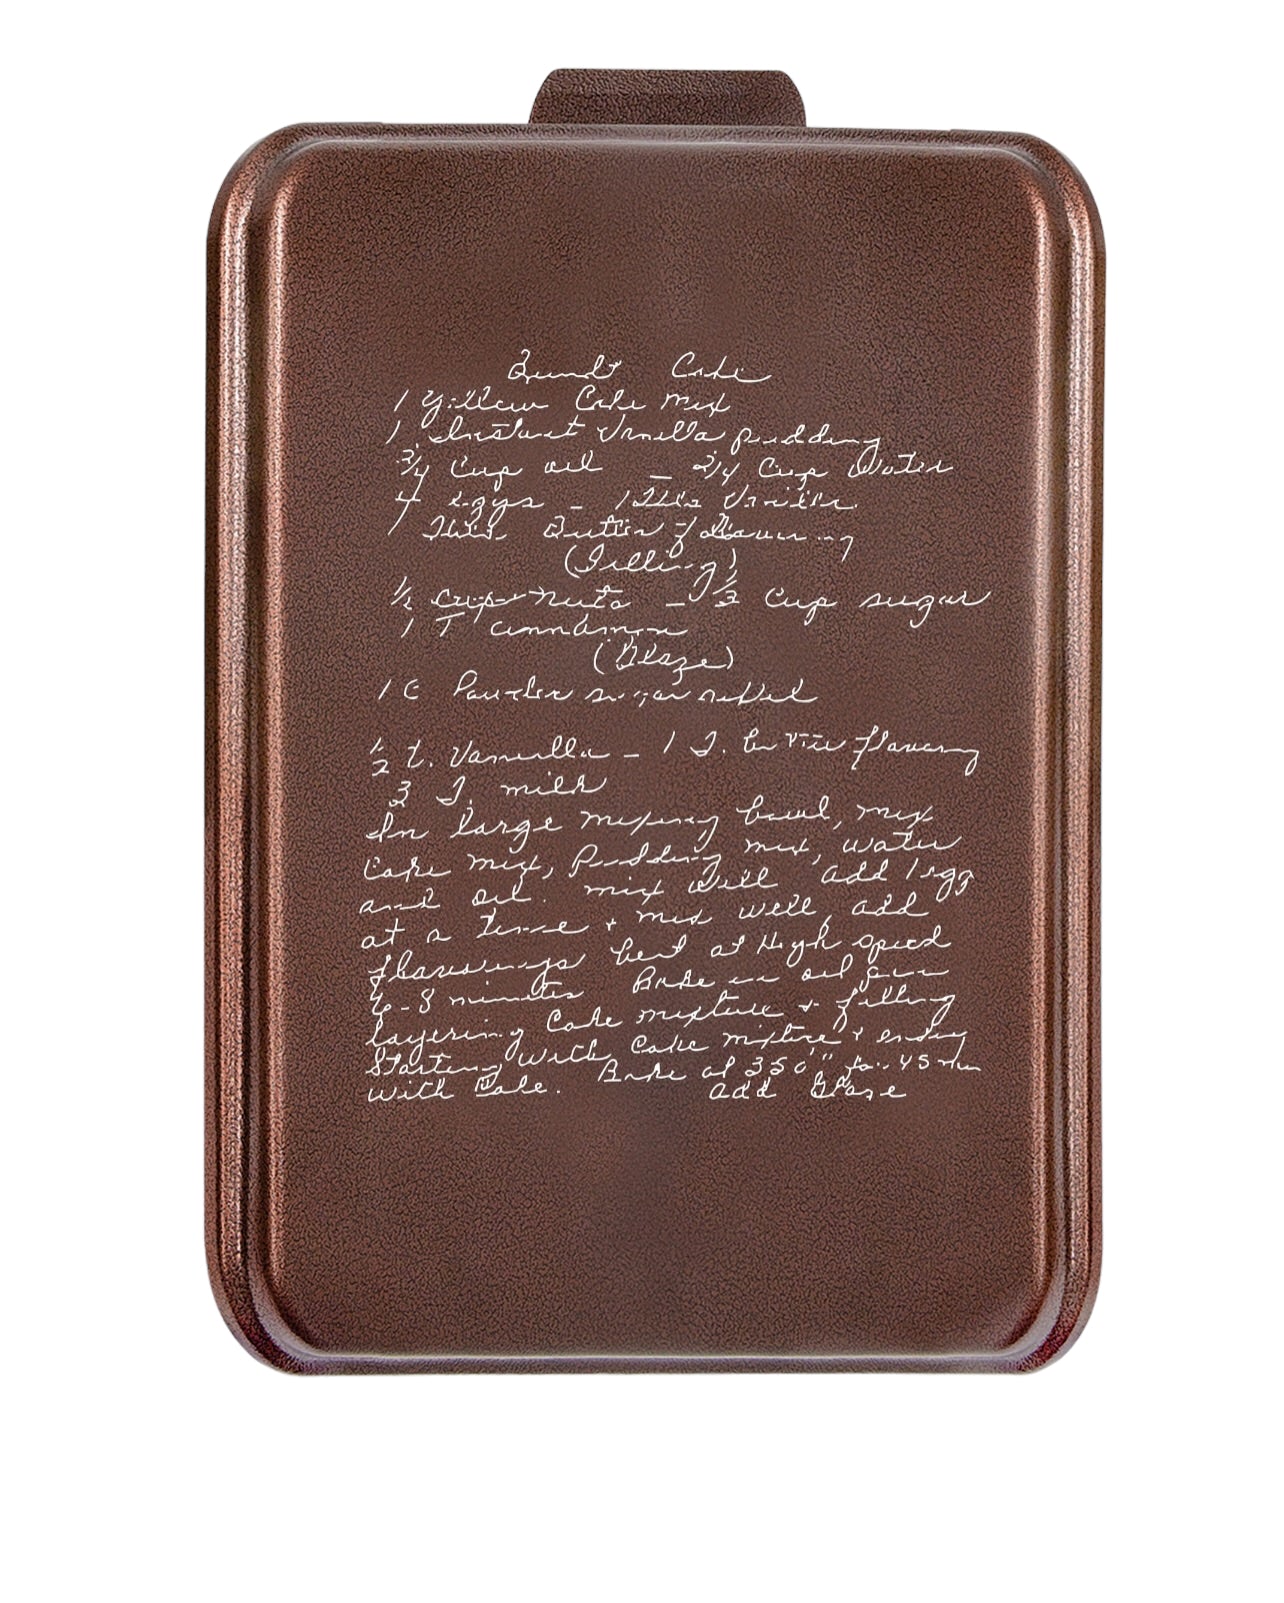 9” x 13” Custom Engraved Cake Pan Aluminum, hand written recipe